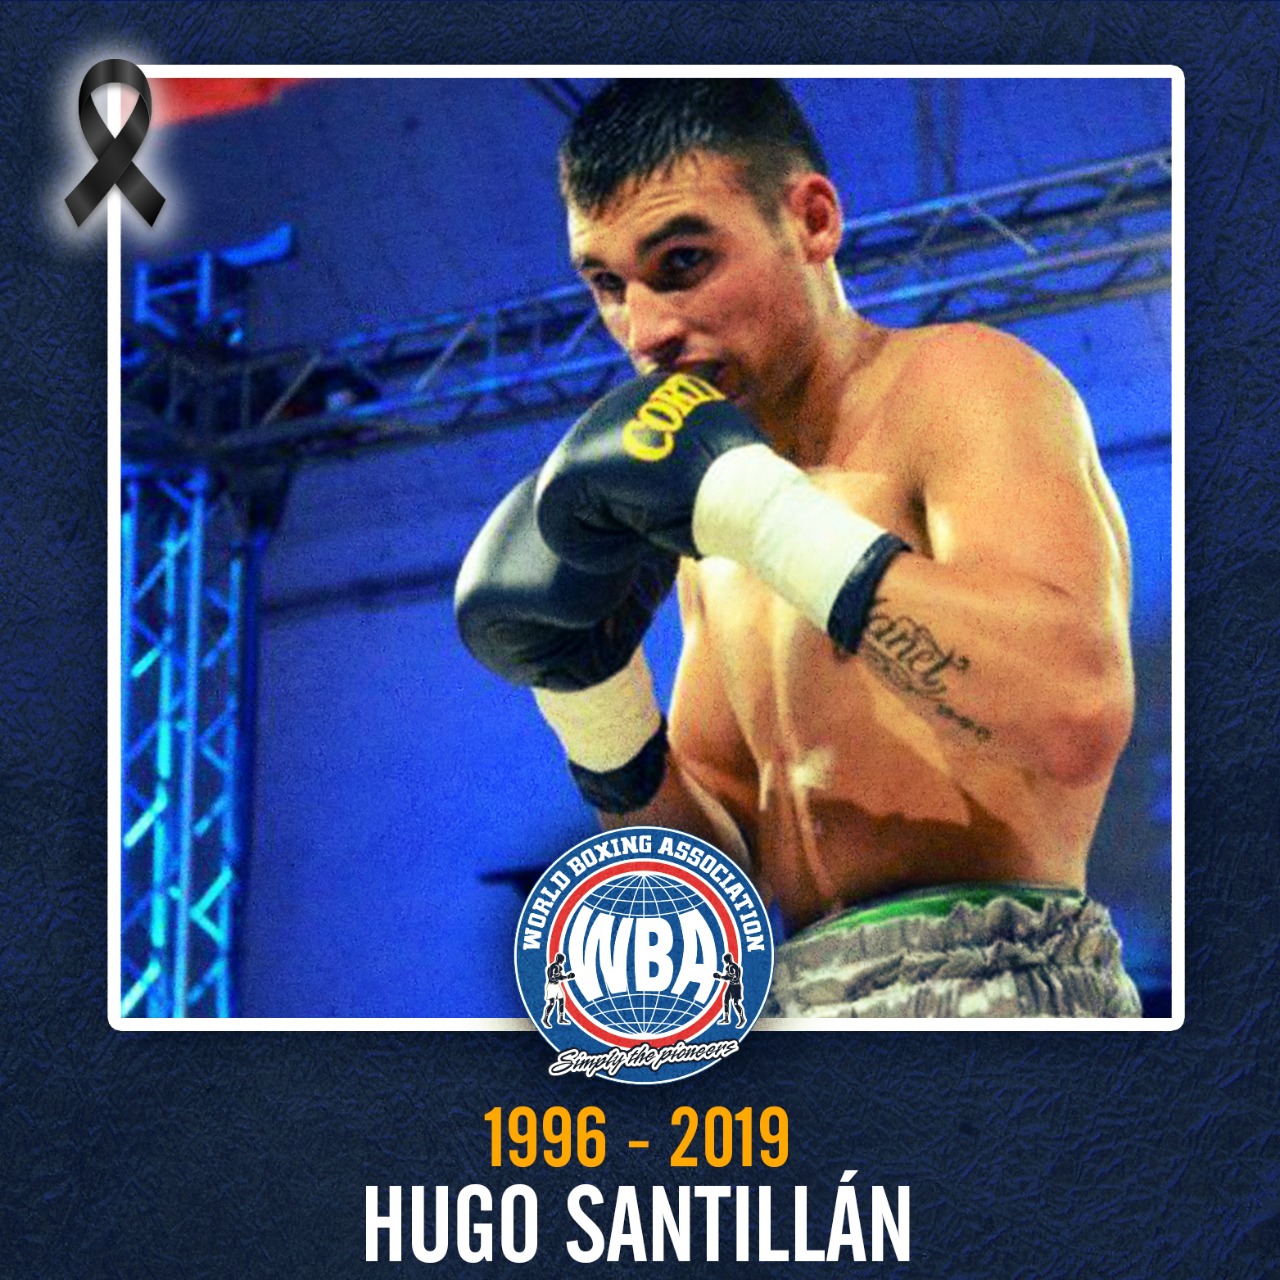 Boxing loses Hugo Santillan